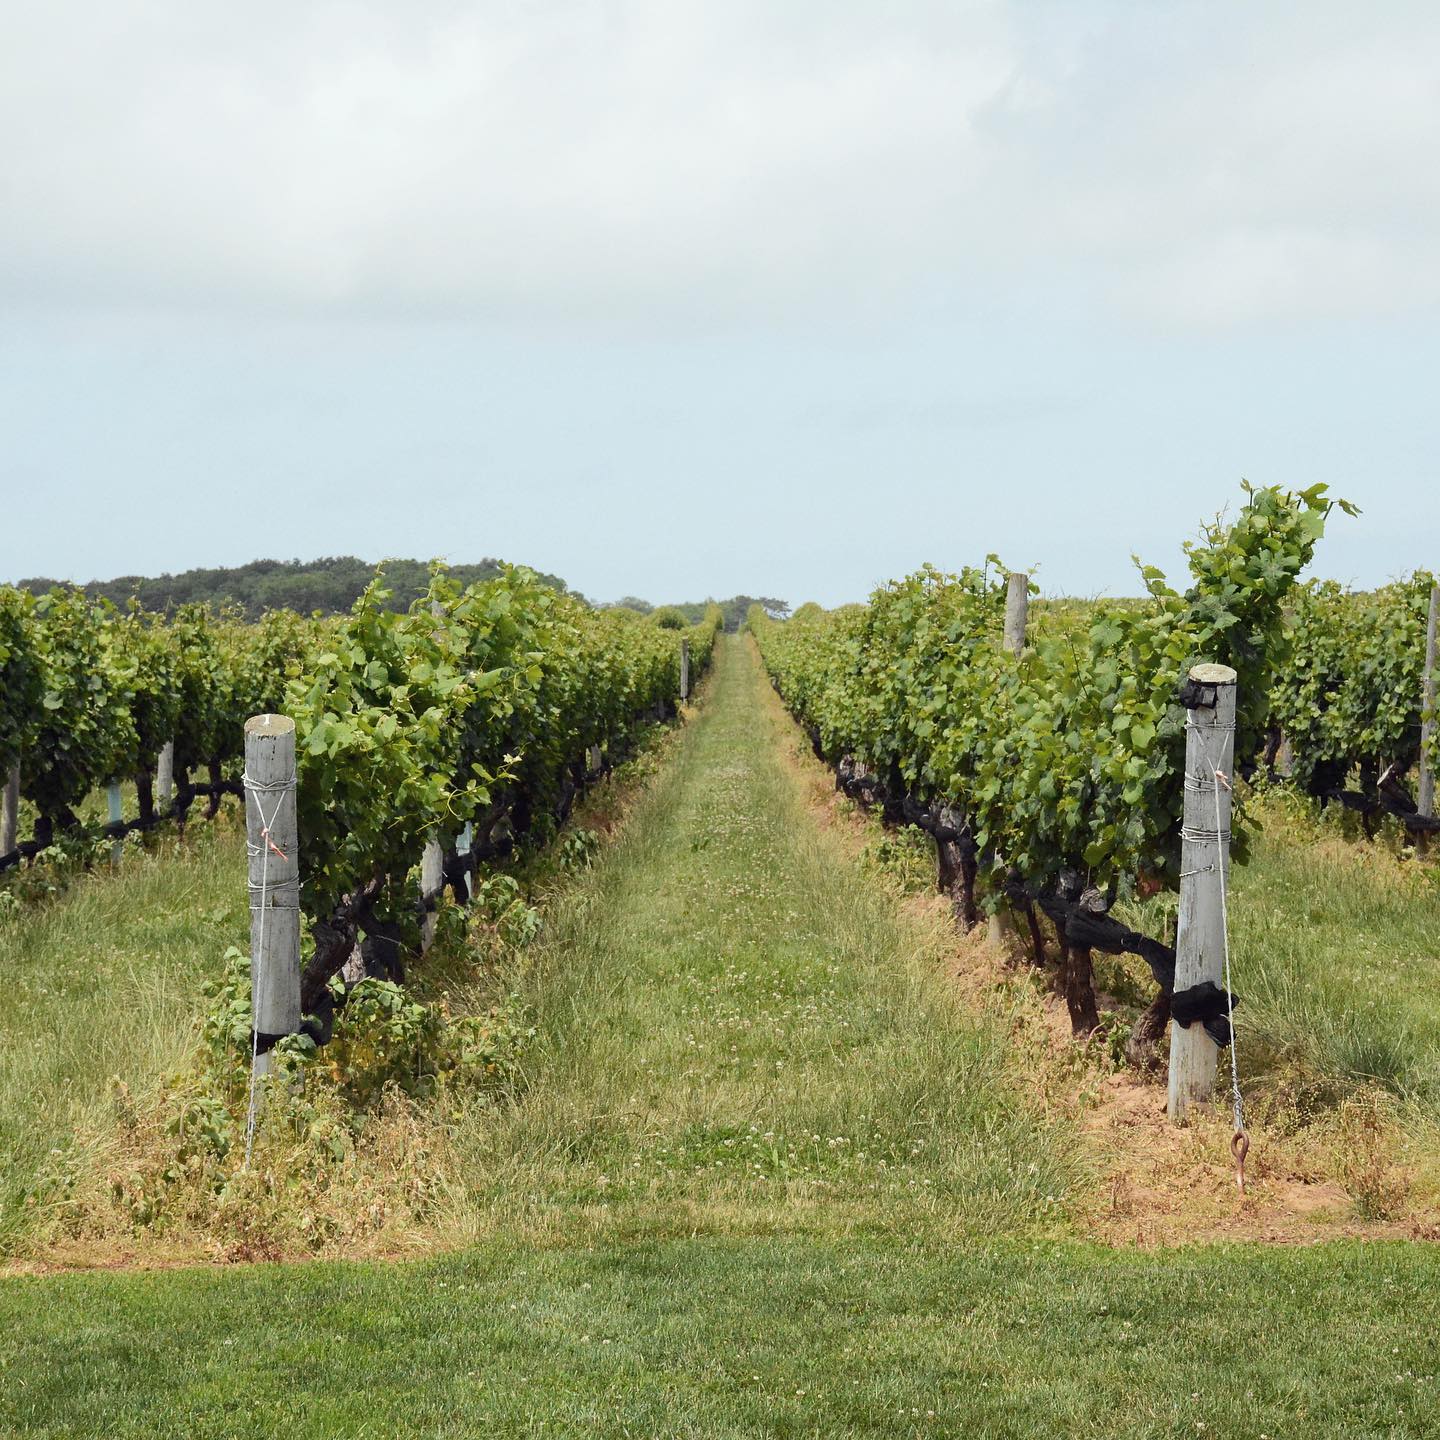 Grape vines at a vineyard on Long Island. Photo by Instagram user @pindarvineyards